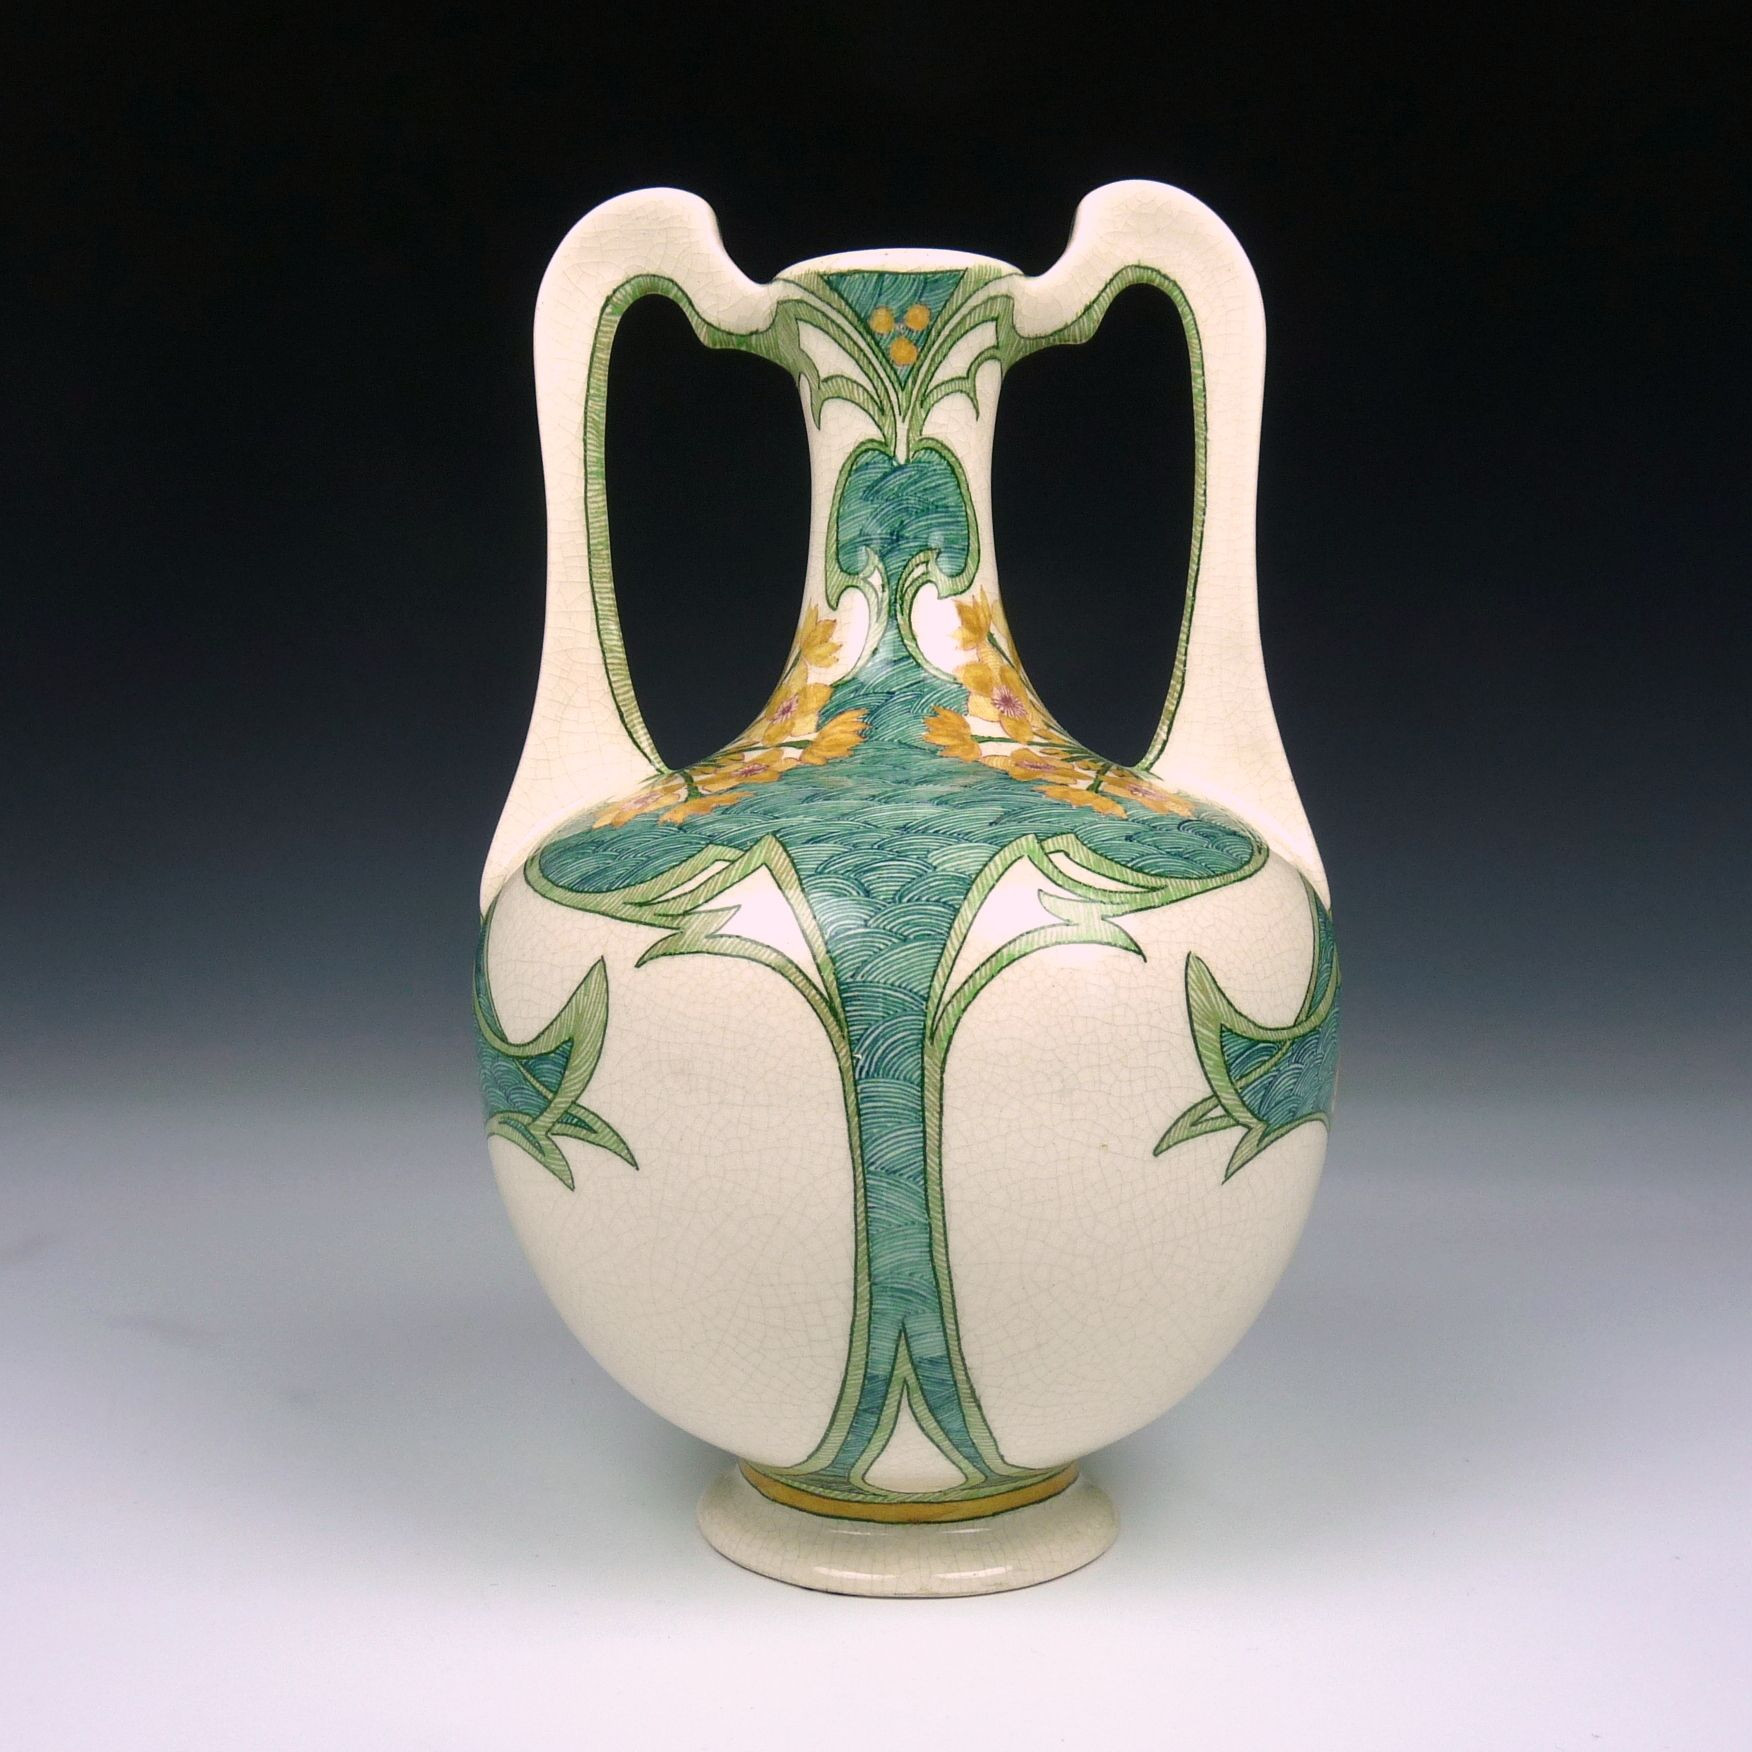 art deco vases antique of art nouveau era vase circa 1902 dutch decorative arts early with regard to art nouveau era vase circa 1902 dutch